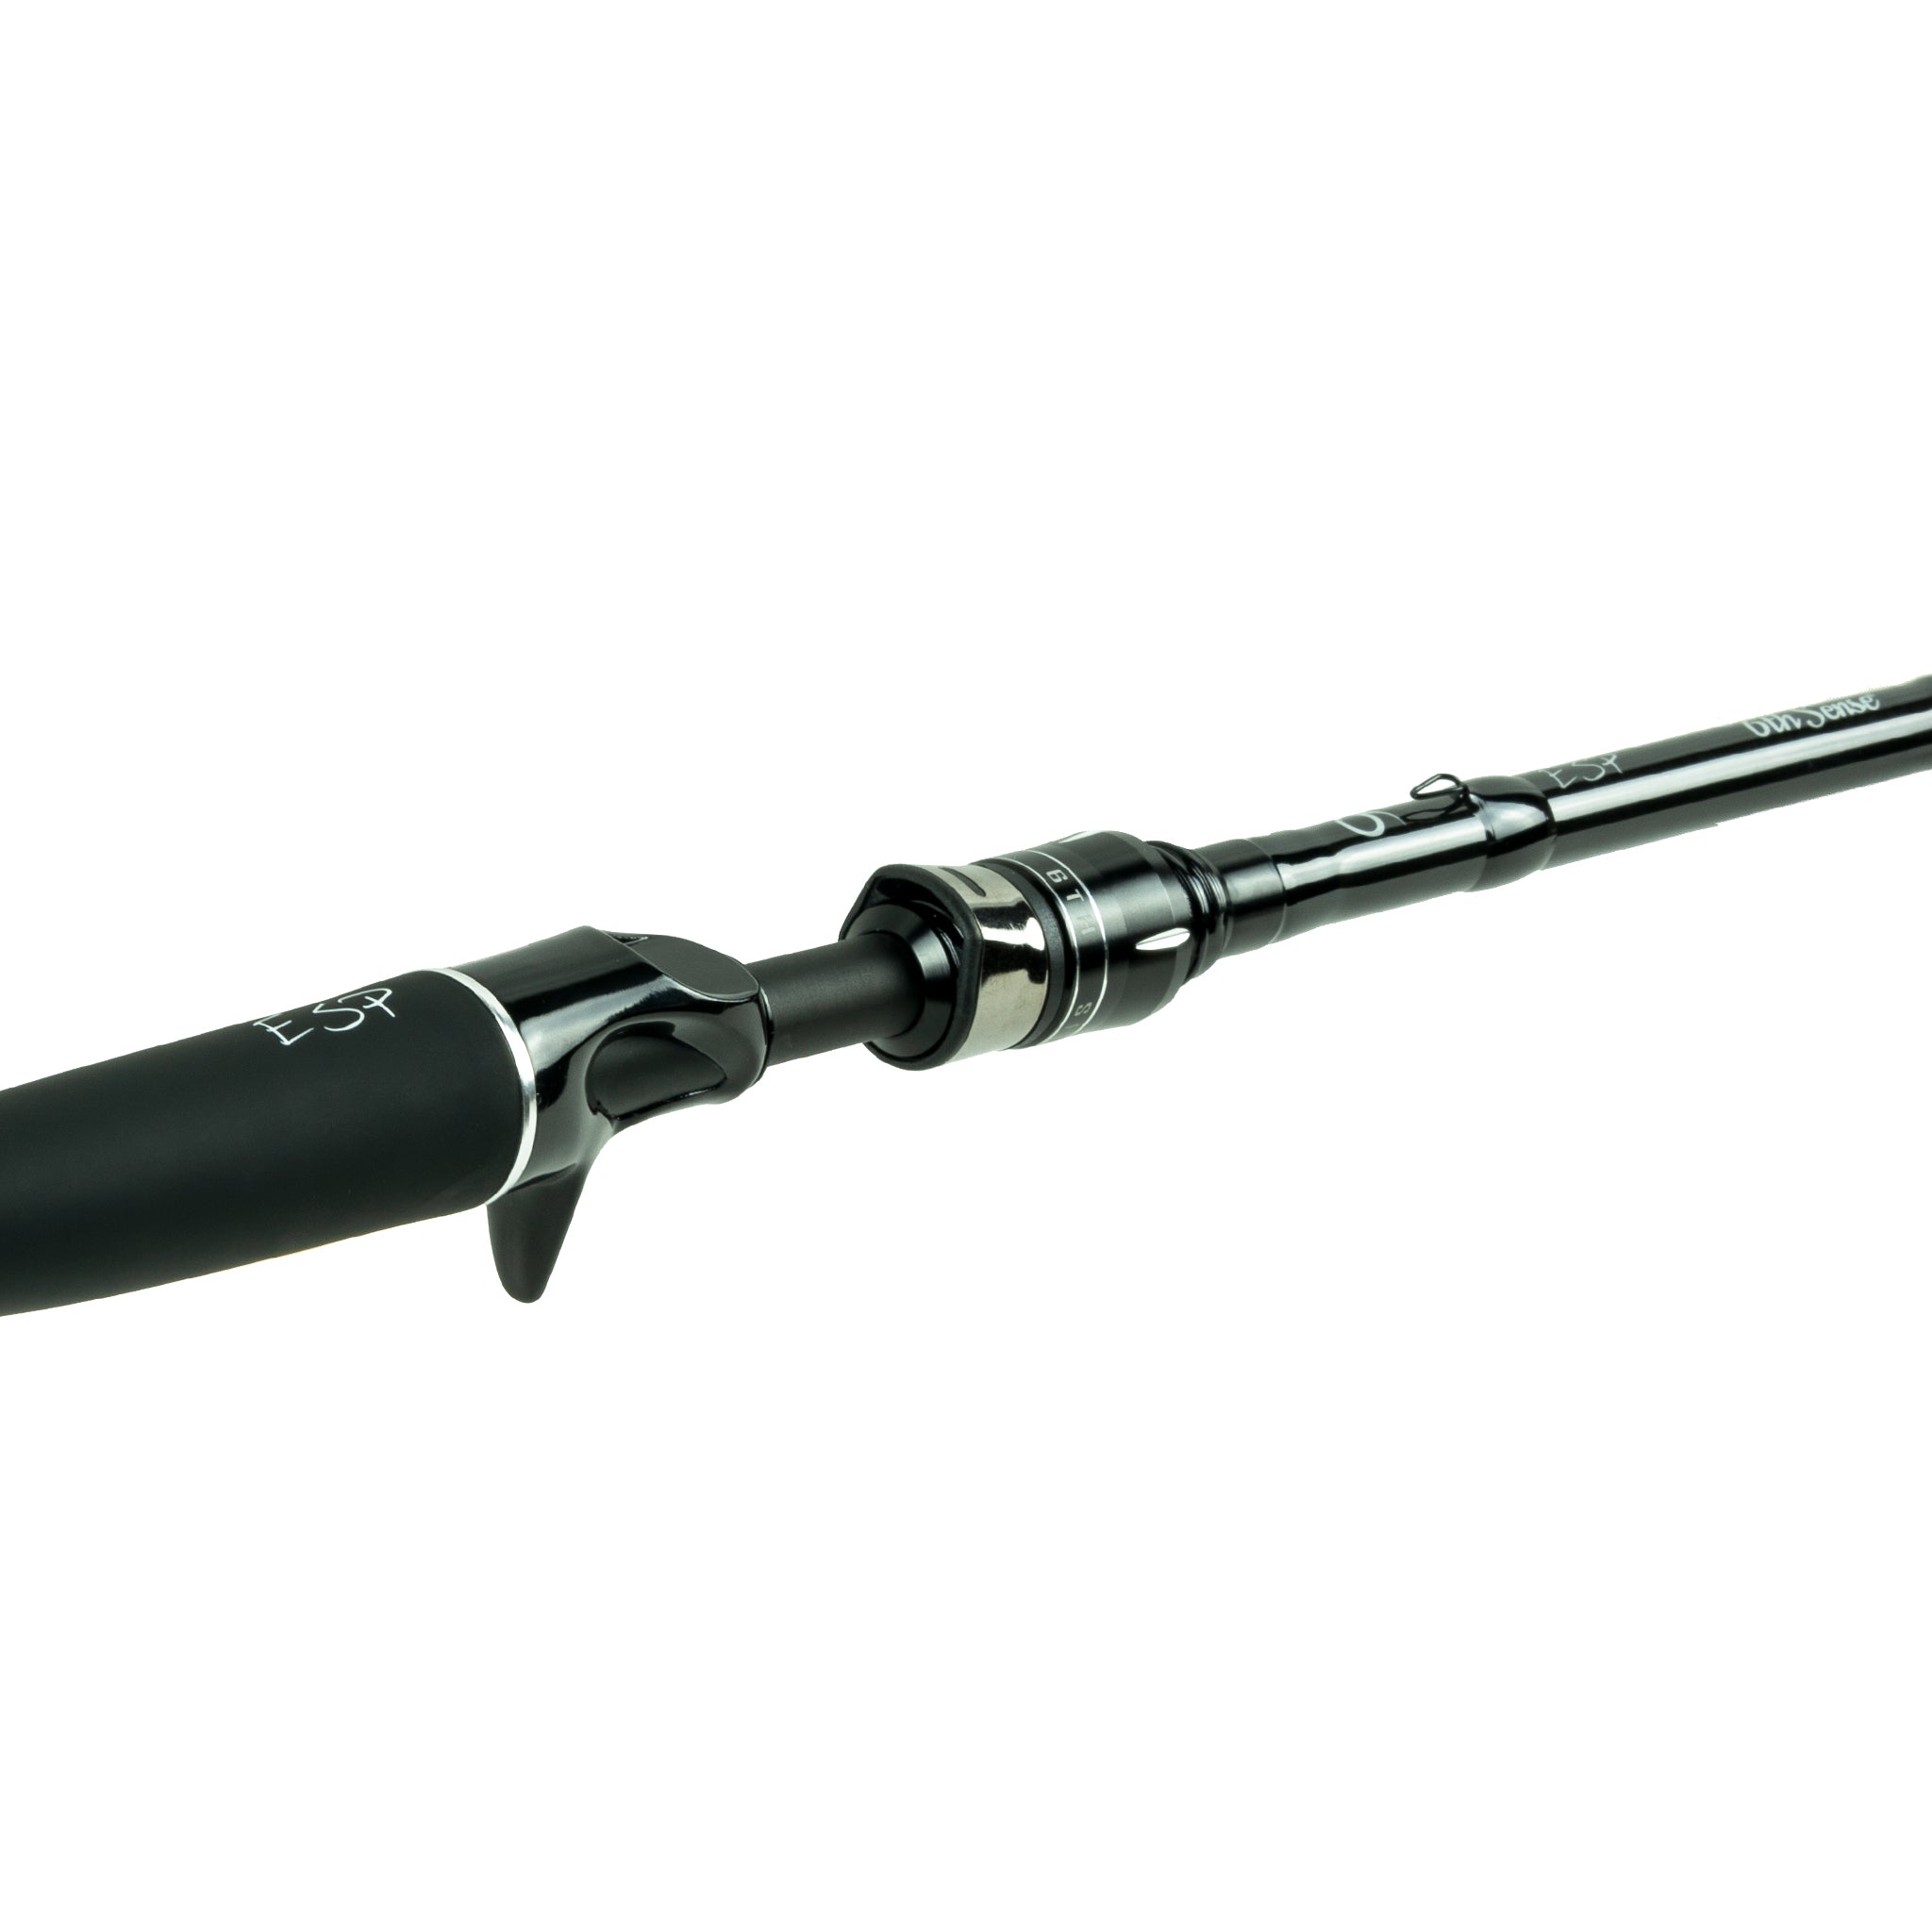 6th Sense Fishing - ESP Series Casting Rod - 7'9 Medium, Moderate